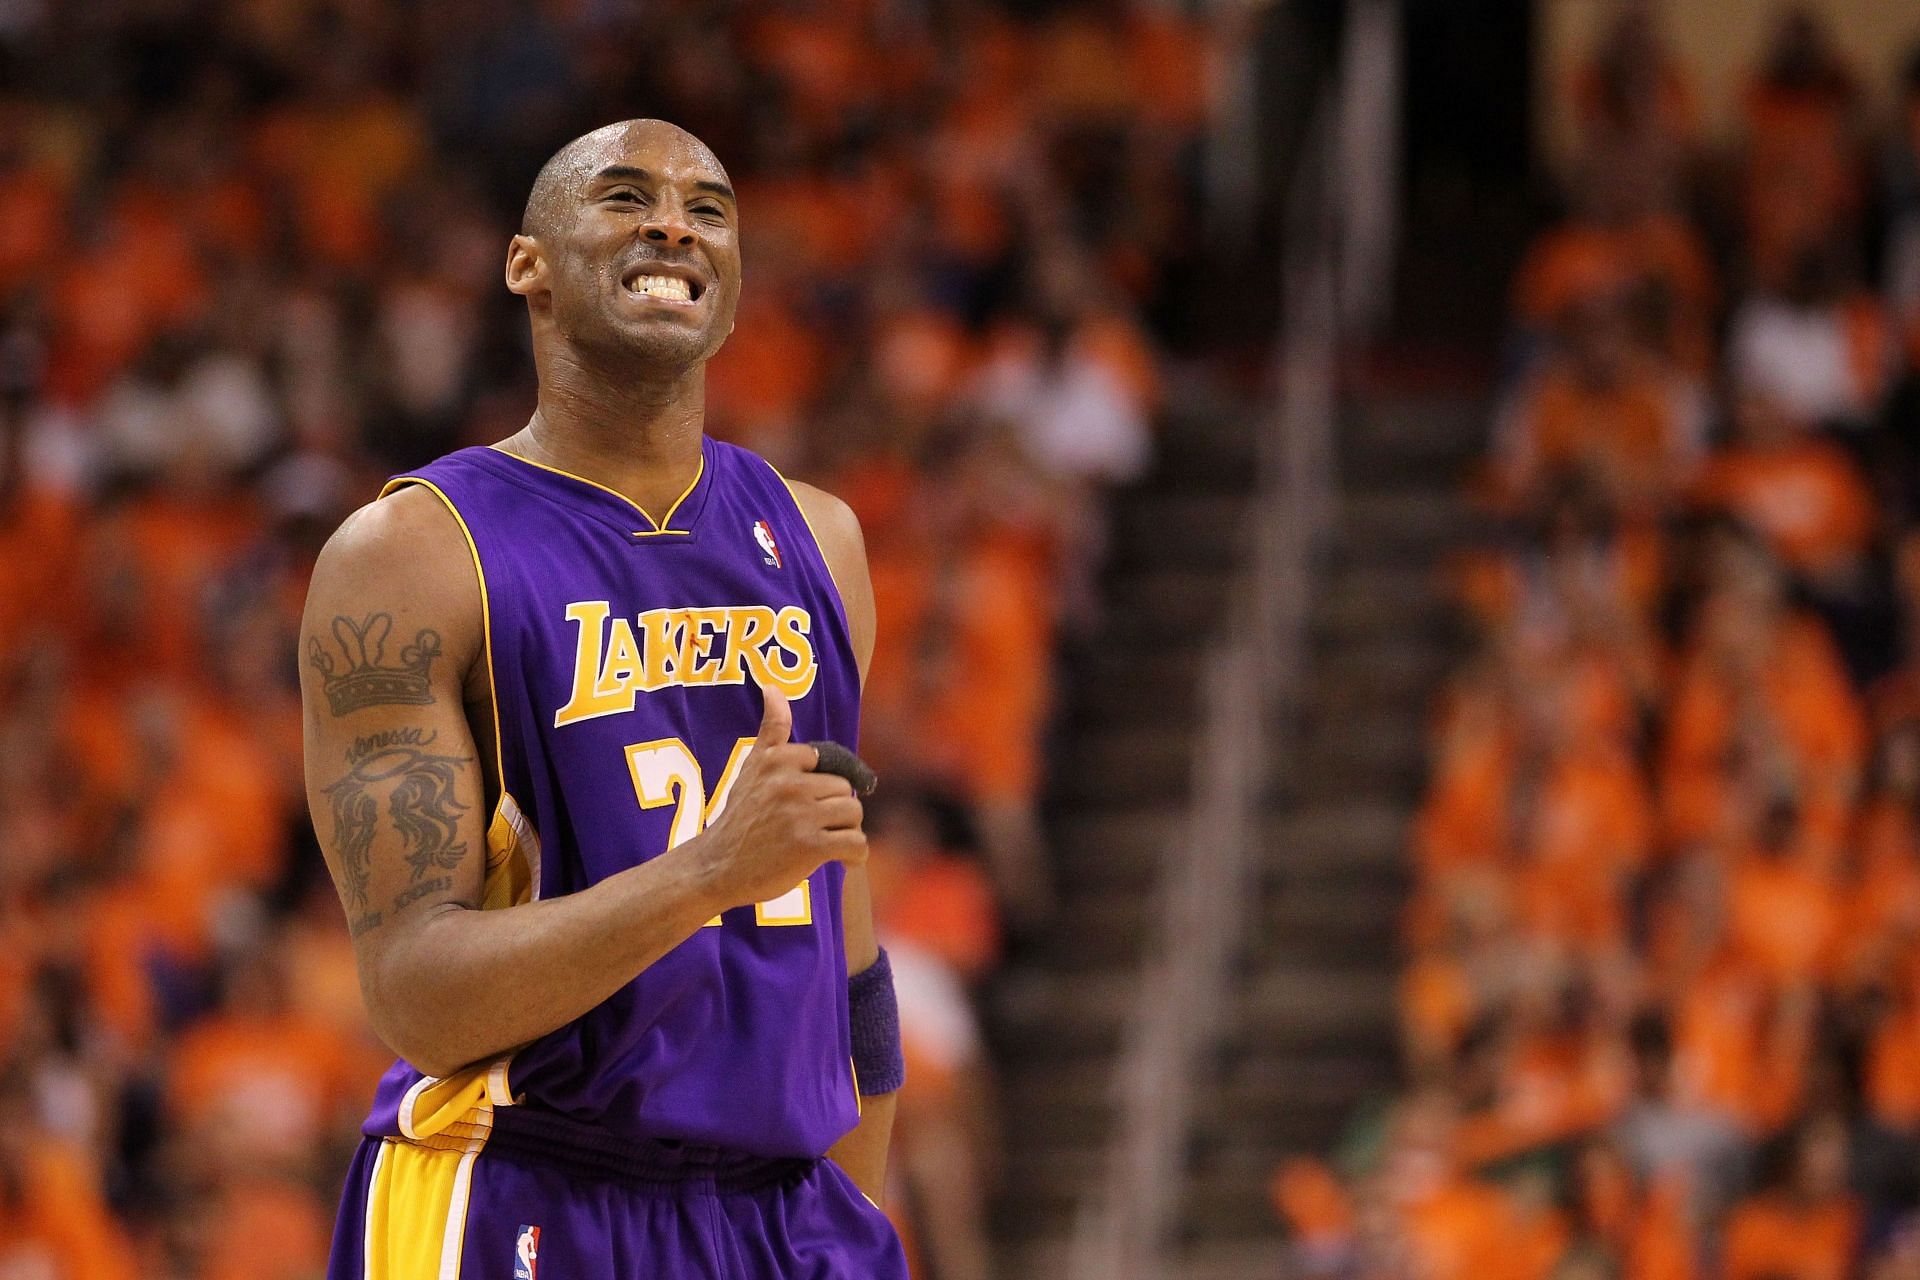 Kobe Bryant of the Los Angeles Lakers.